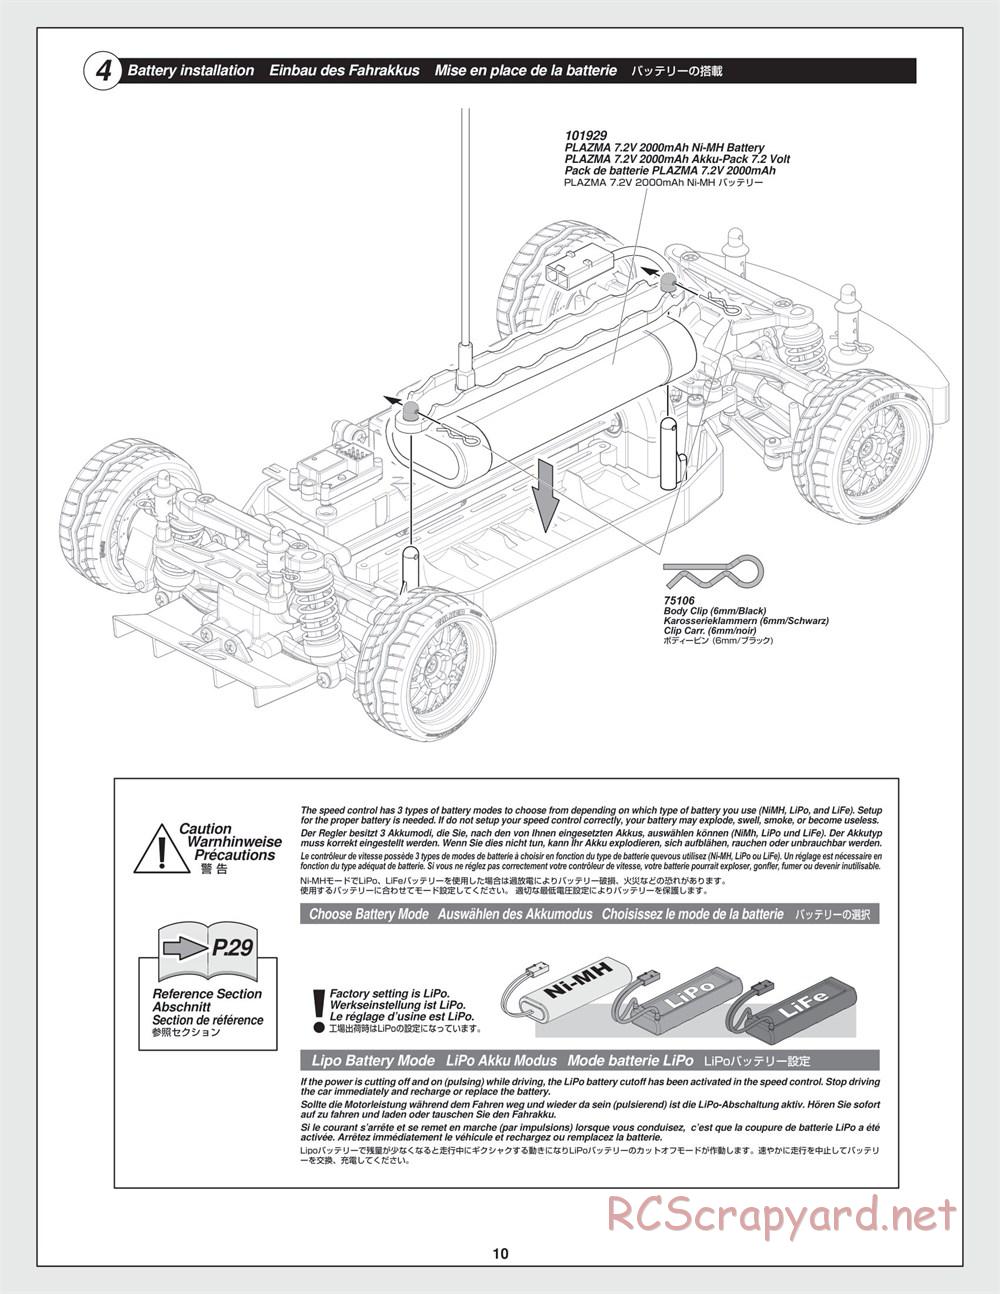 HPI - E10 Drift - Manual - Page 10